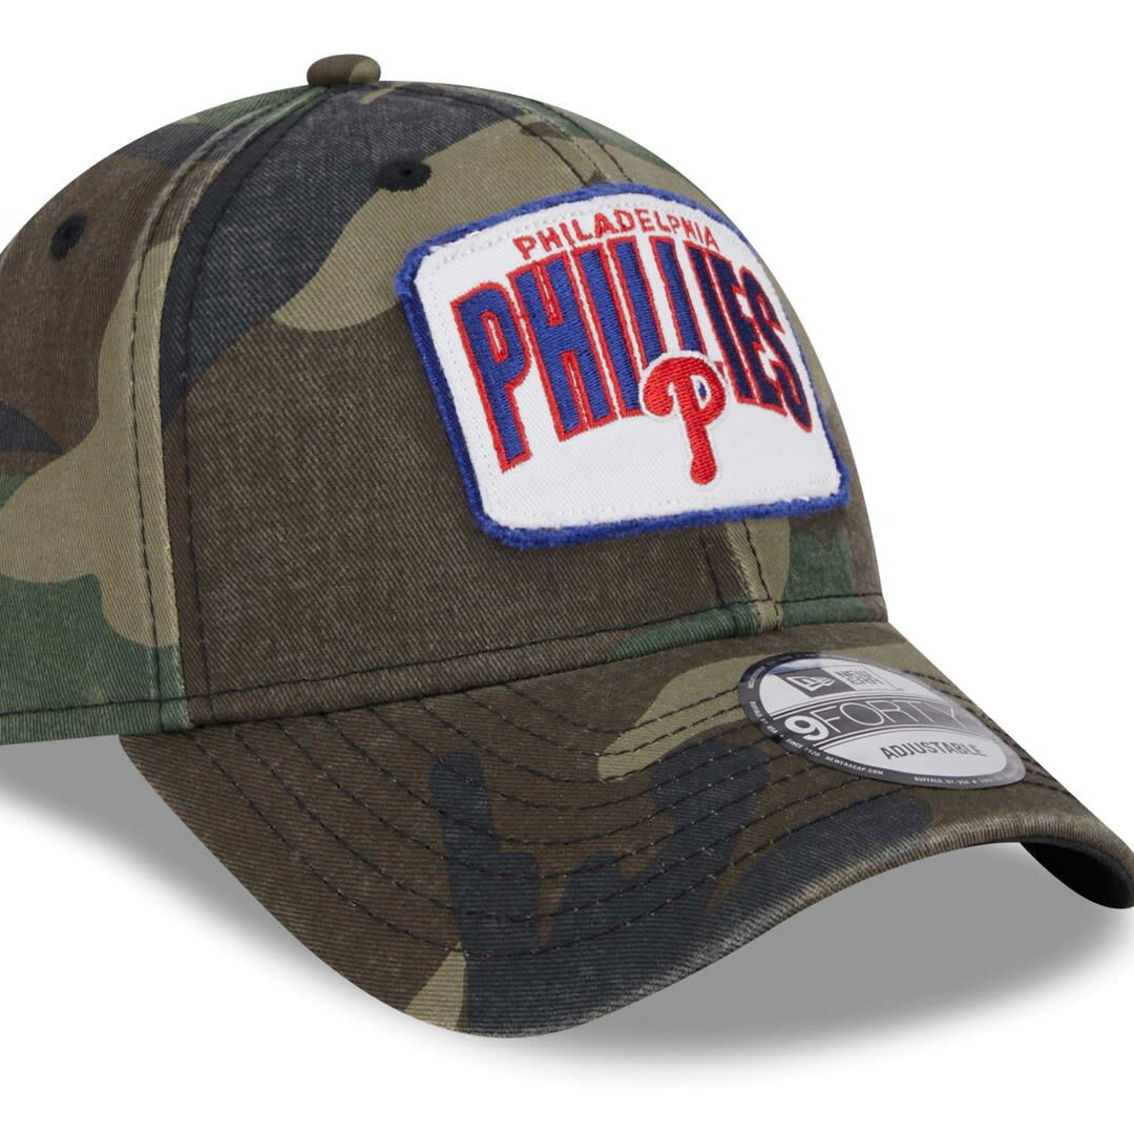 New Era Men's Camo Philadelphia Phillies Gameday 9FORTY Adjustable Hat - Image 4 of 4